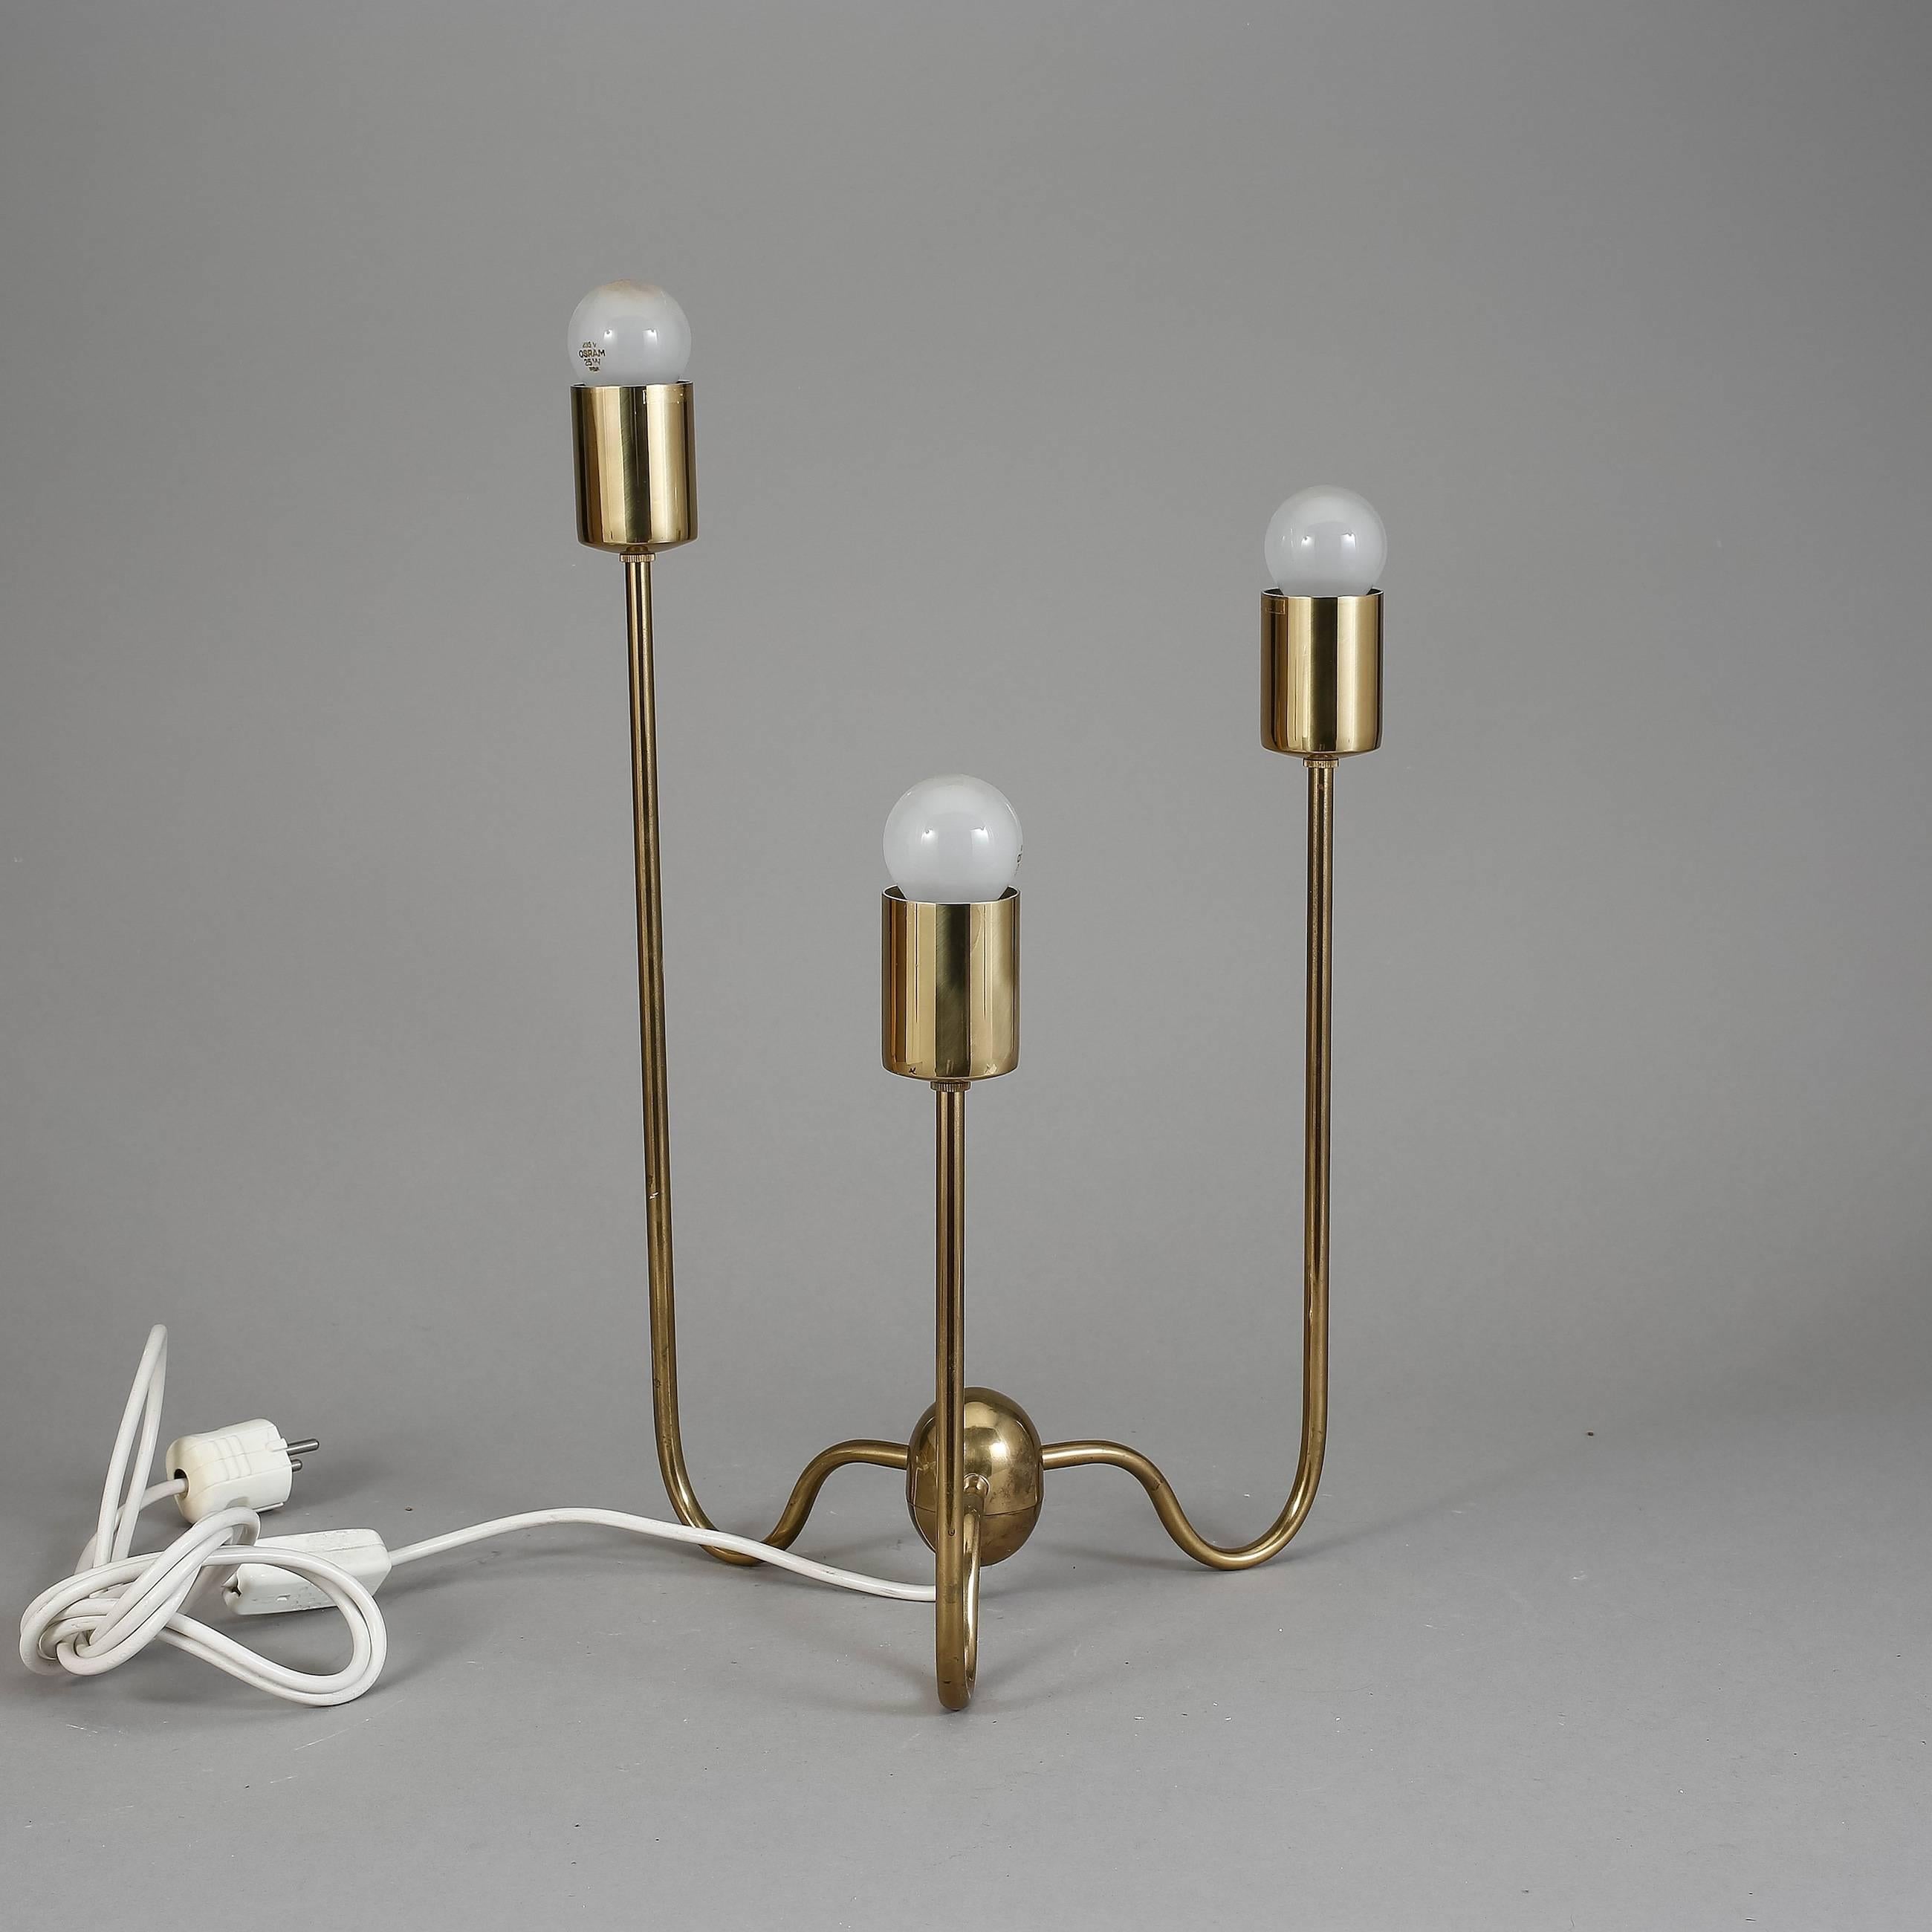 Scandinavian Modern Josef Frank Table Lamp with Three Arms 